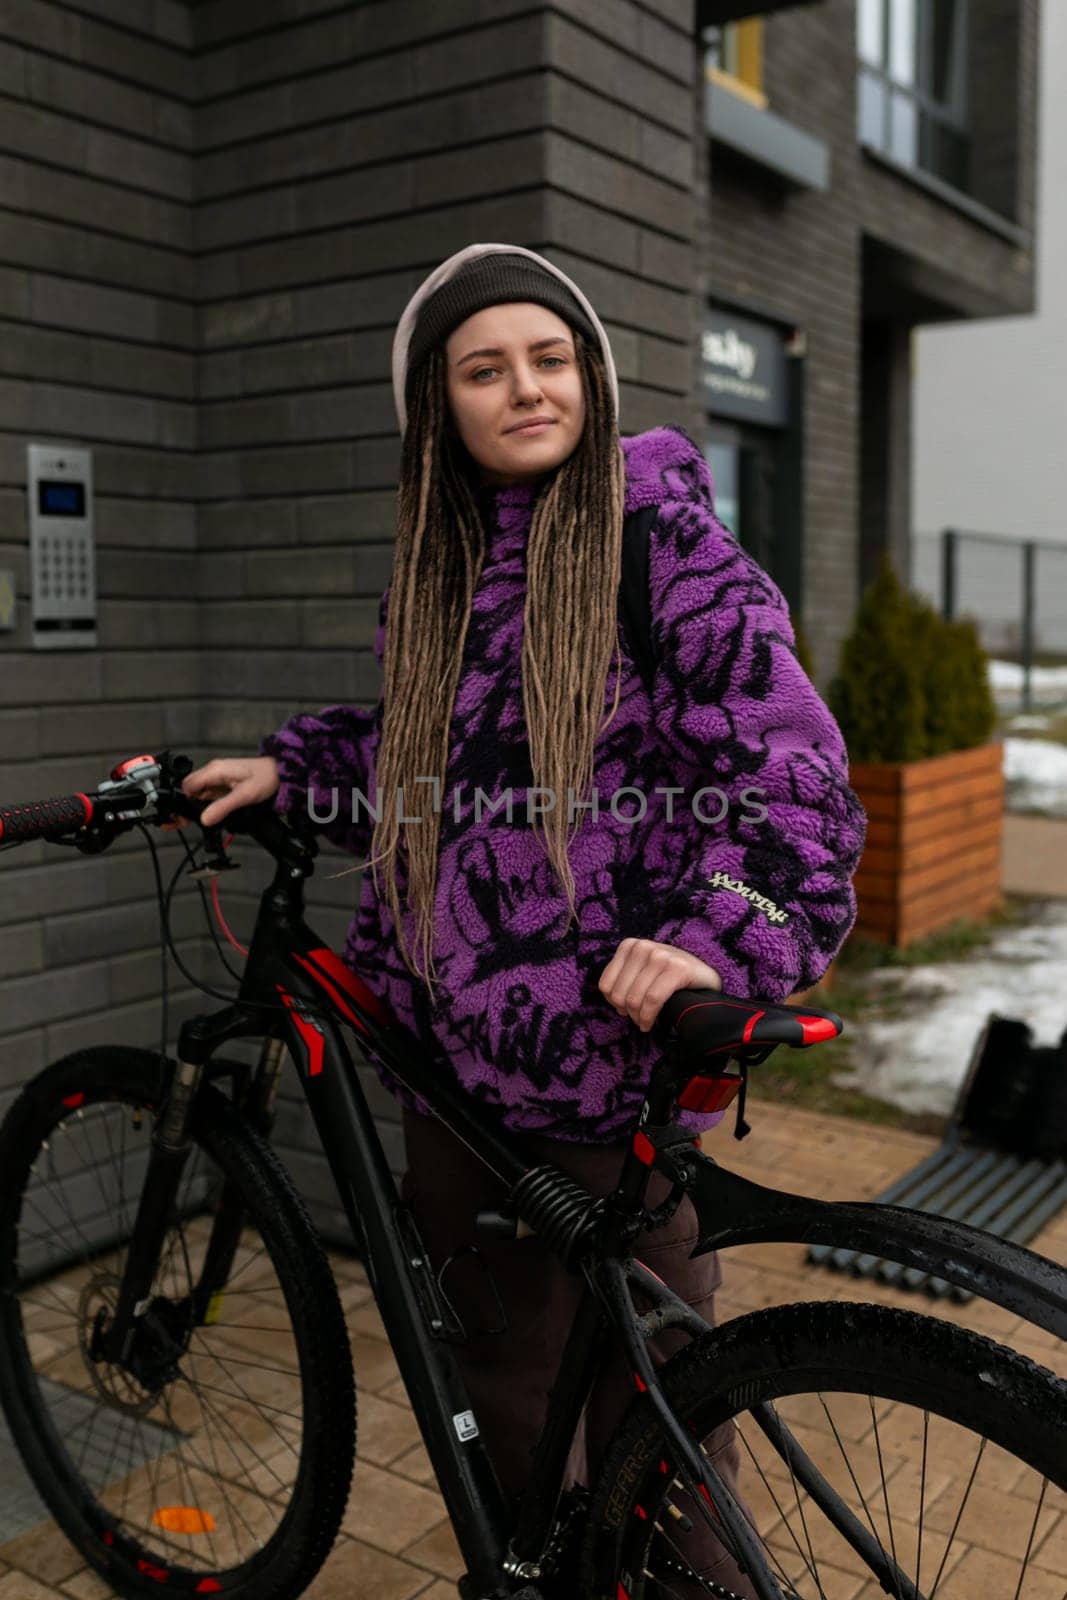 European stylish woman enjoys riding a bicycle by TRMK